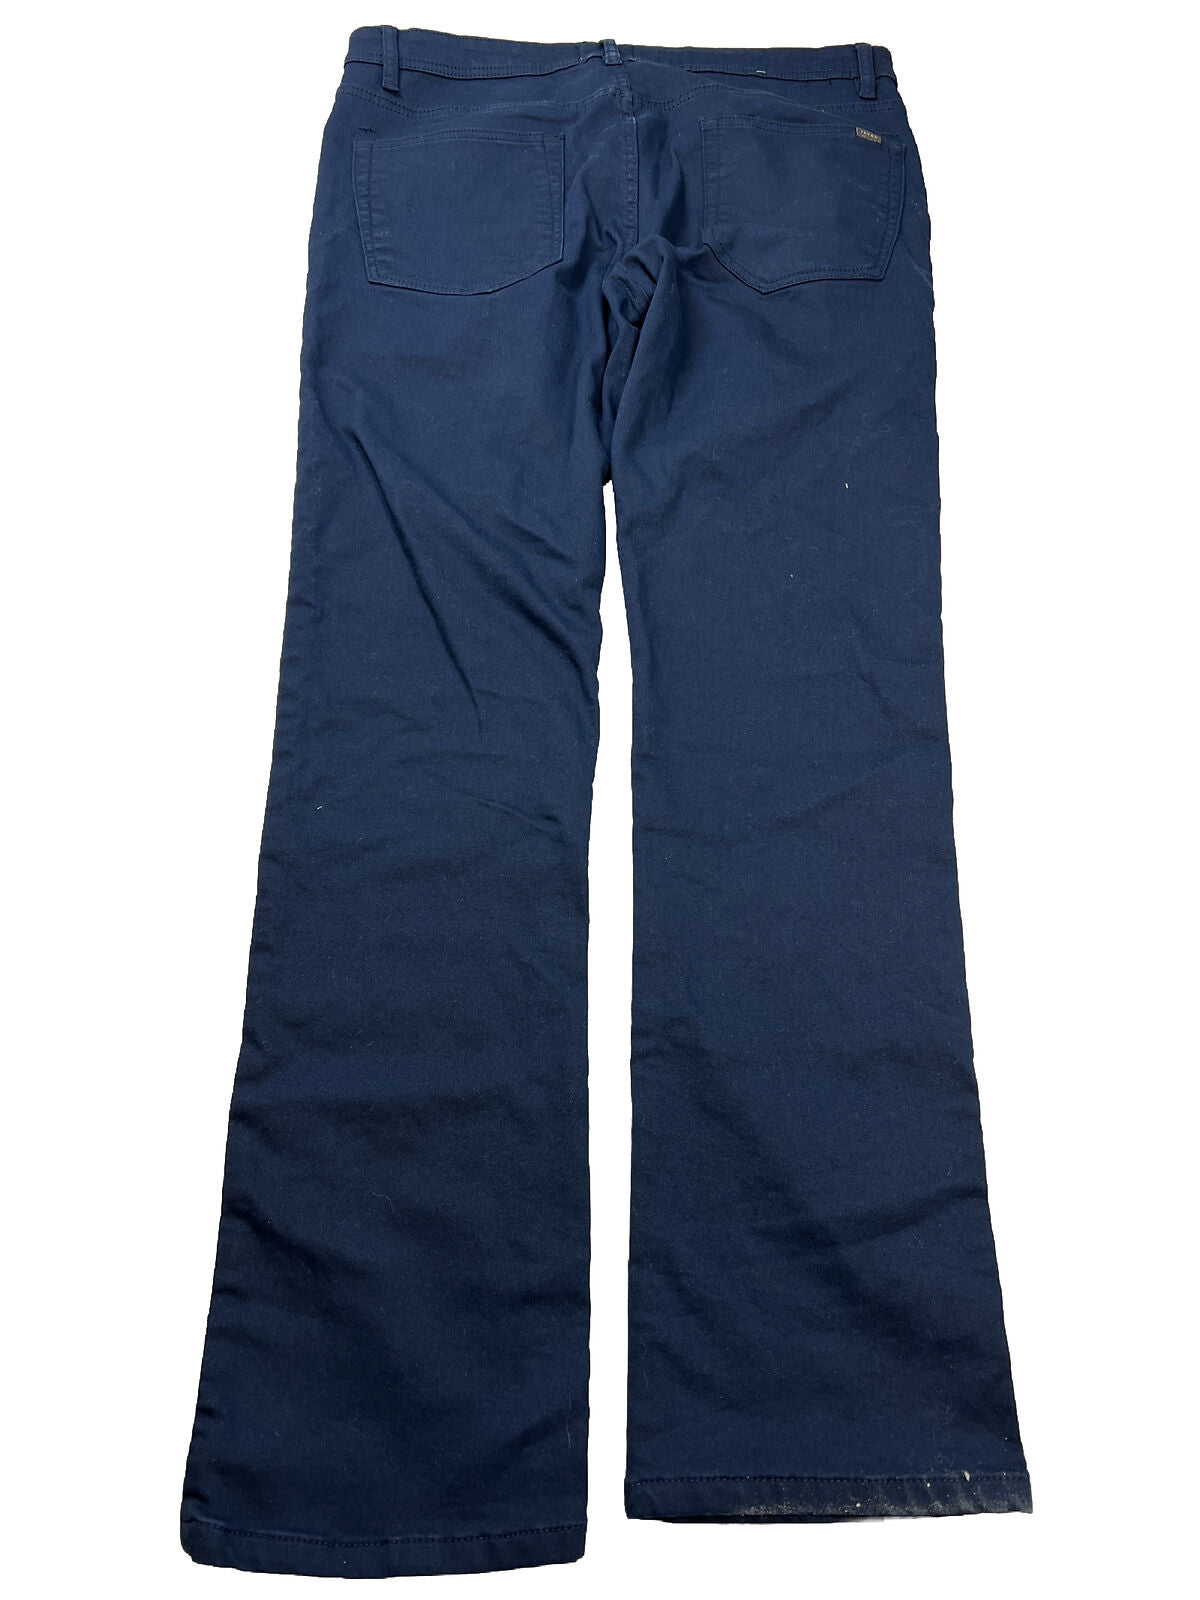 Jachs Men's Navy Blue Slim Stretch Denim Jeans - 36x34